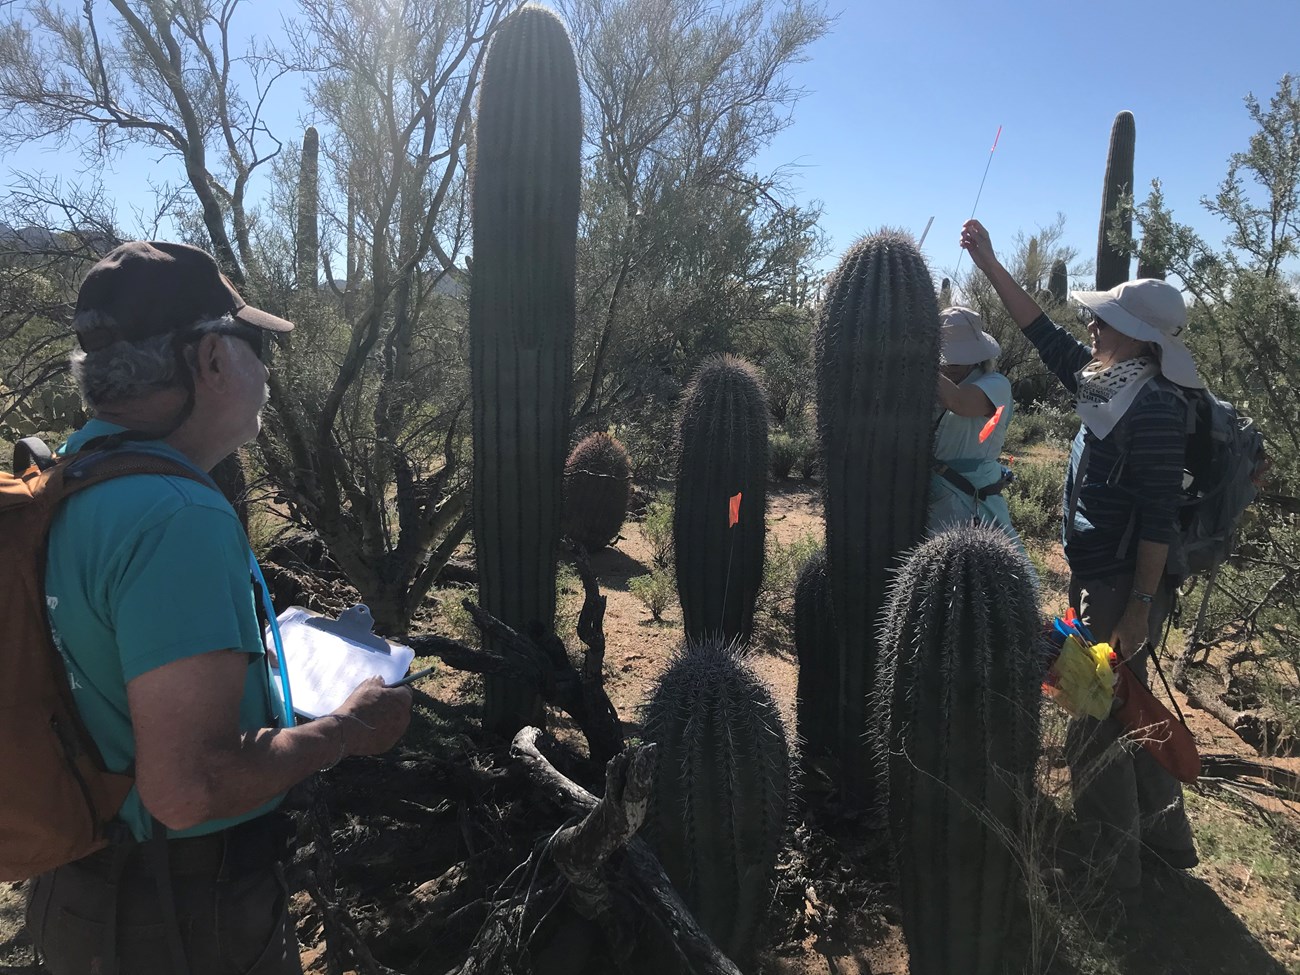 Volunteers take data on a cluster of saguaros